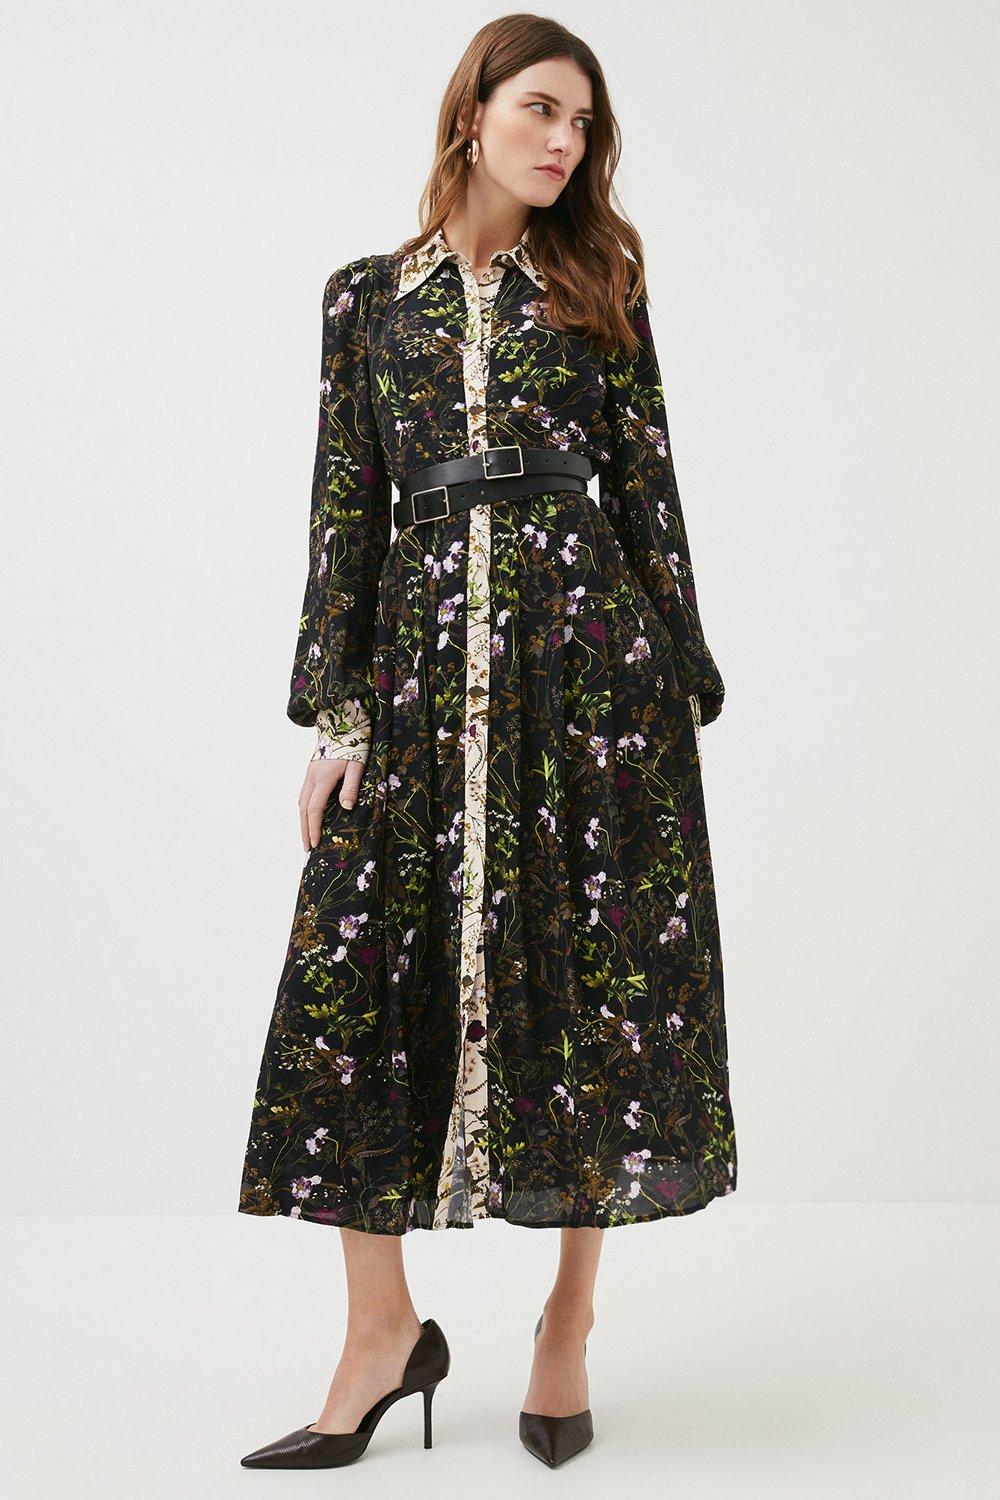 Karen Millen Wild Floral Woven Maxi Dress -, Black | £204.00 | Grazia